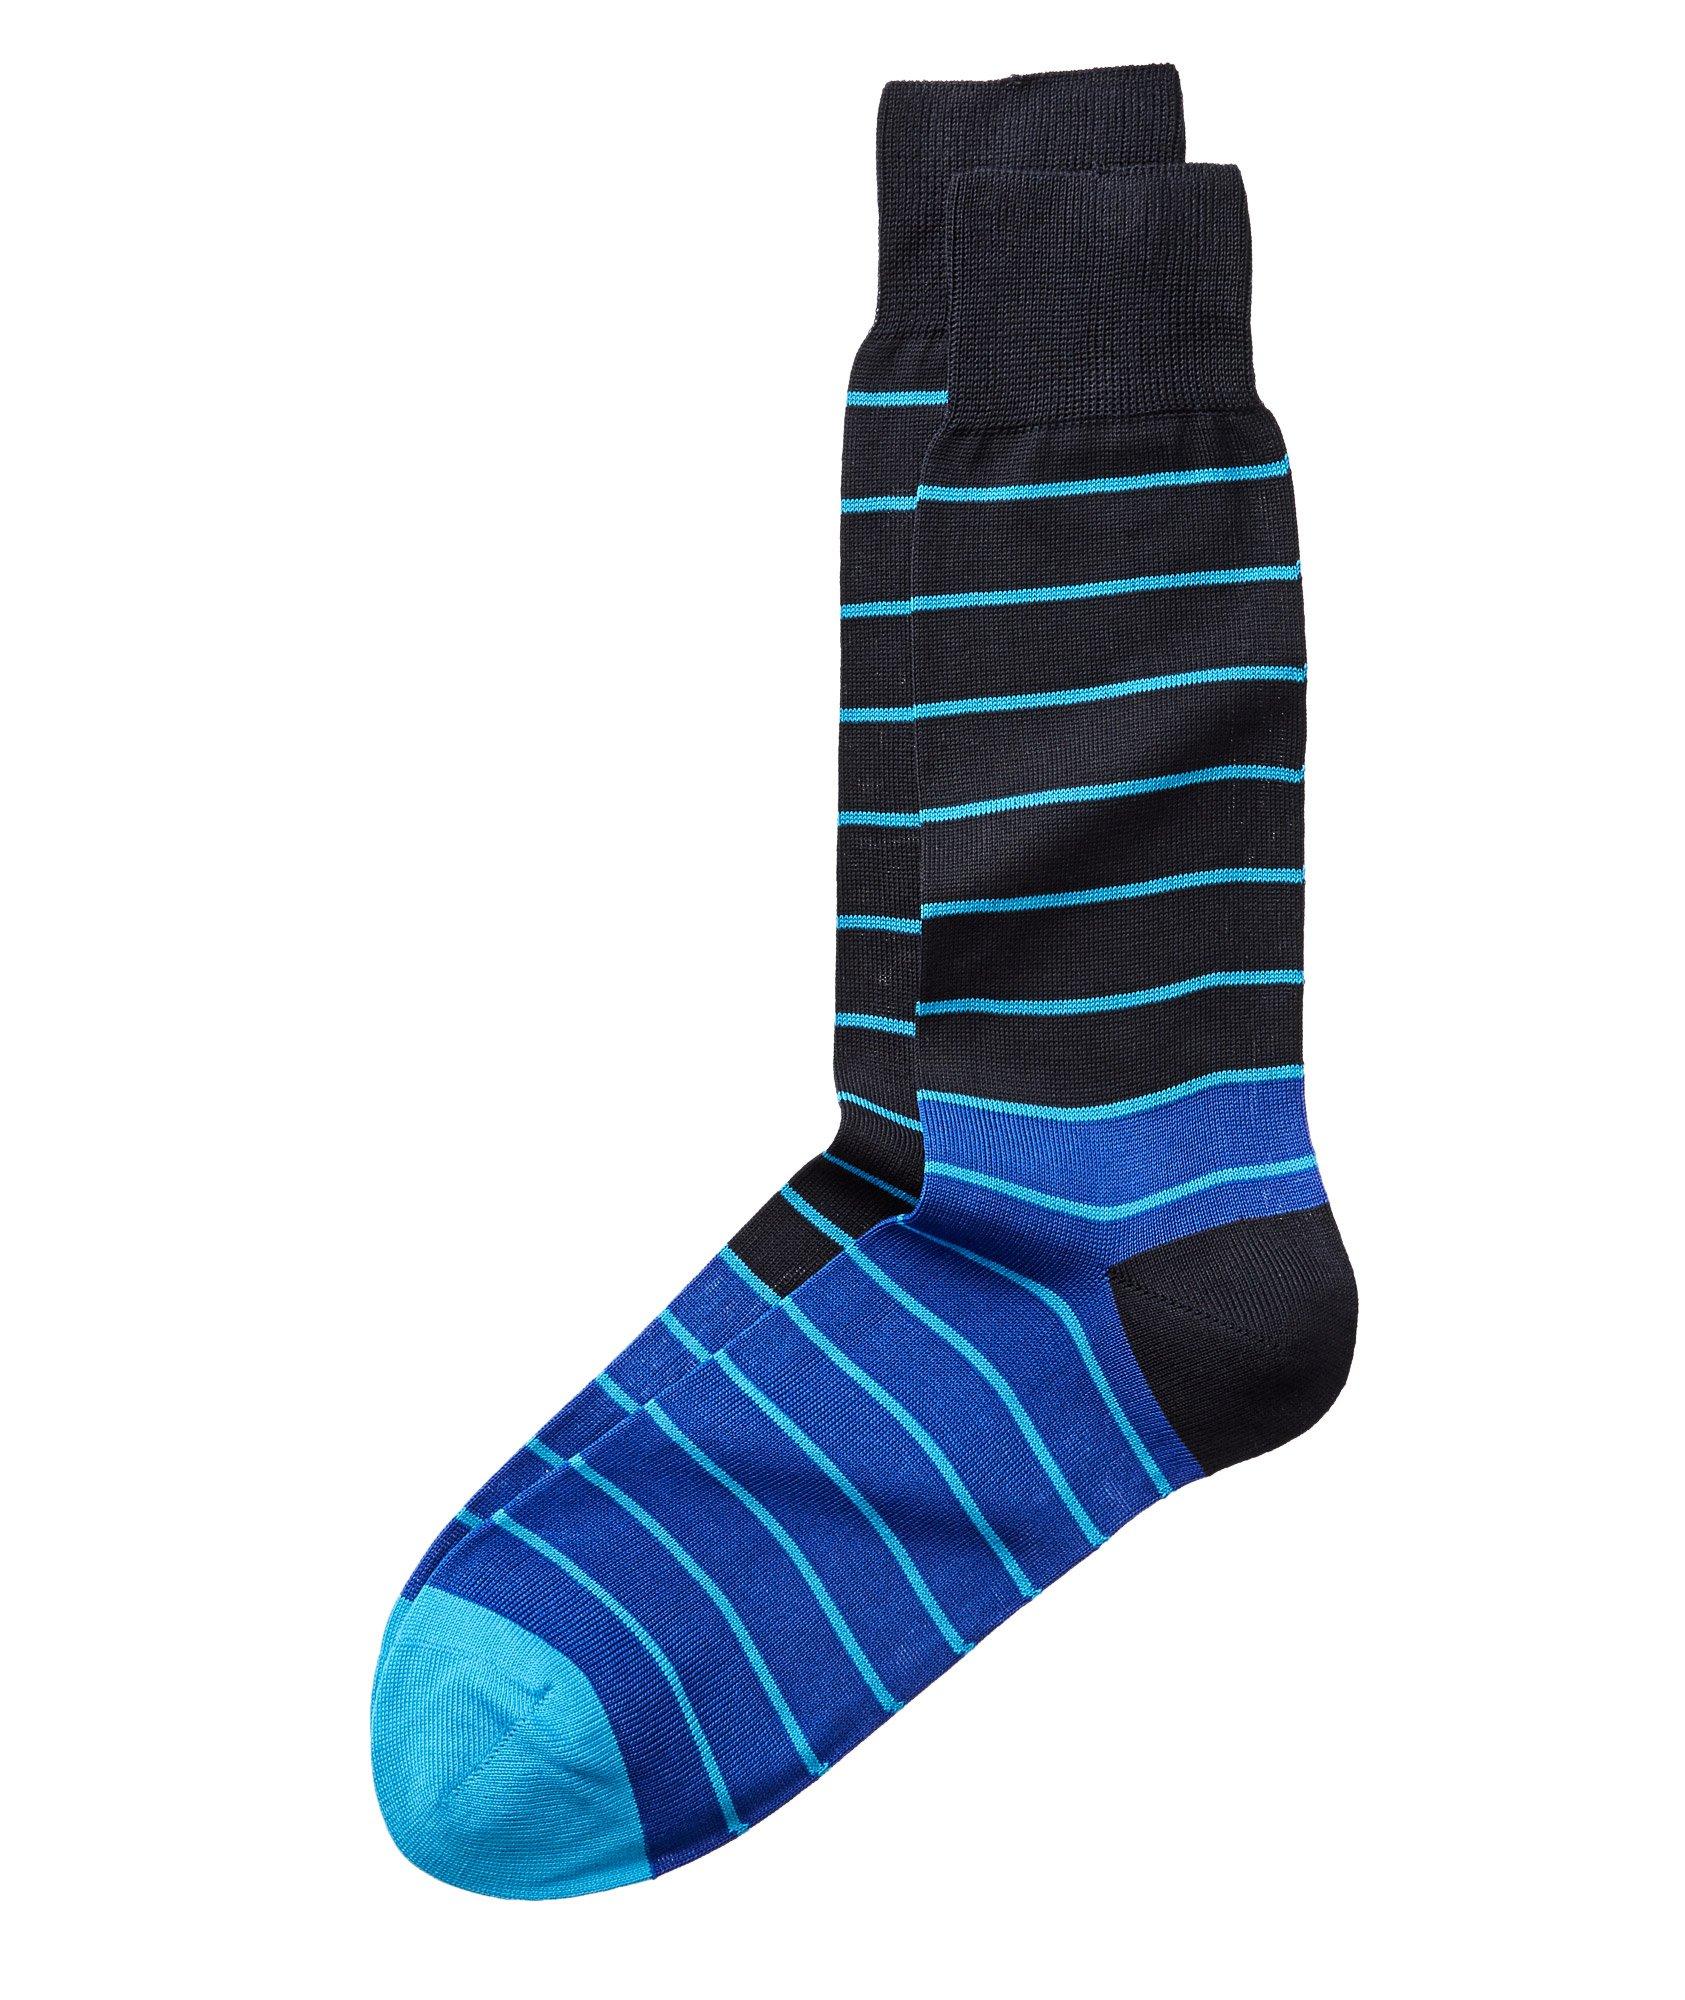 Striped Cotton Socks  image 0